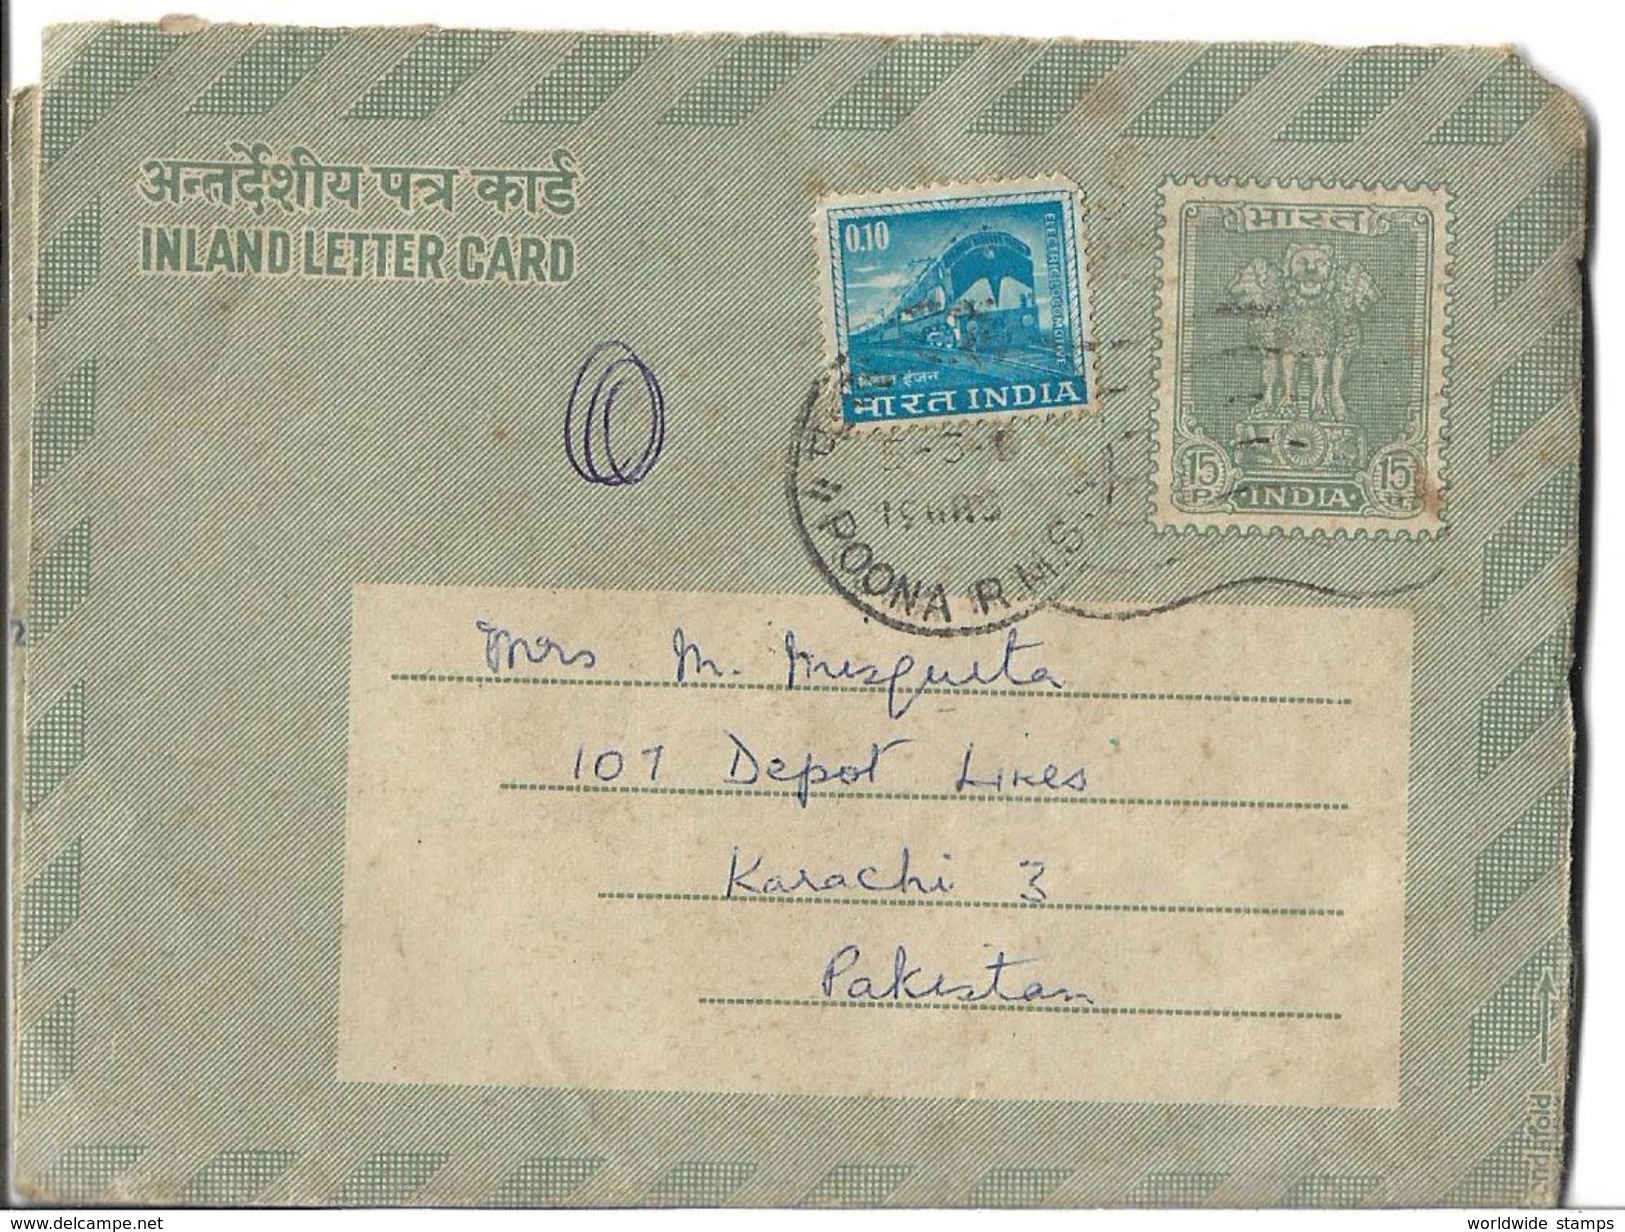 INDIA-INLAND LETTER CARD USED 15p, Train 10p - Aerograms